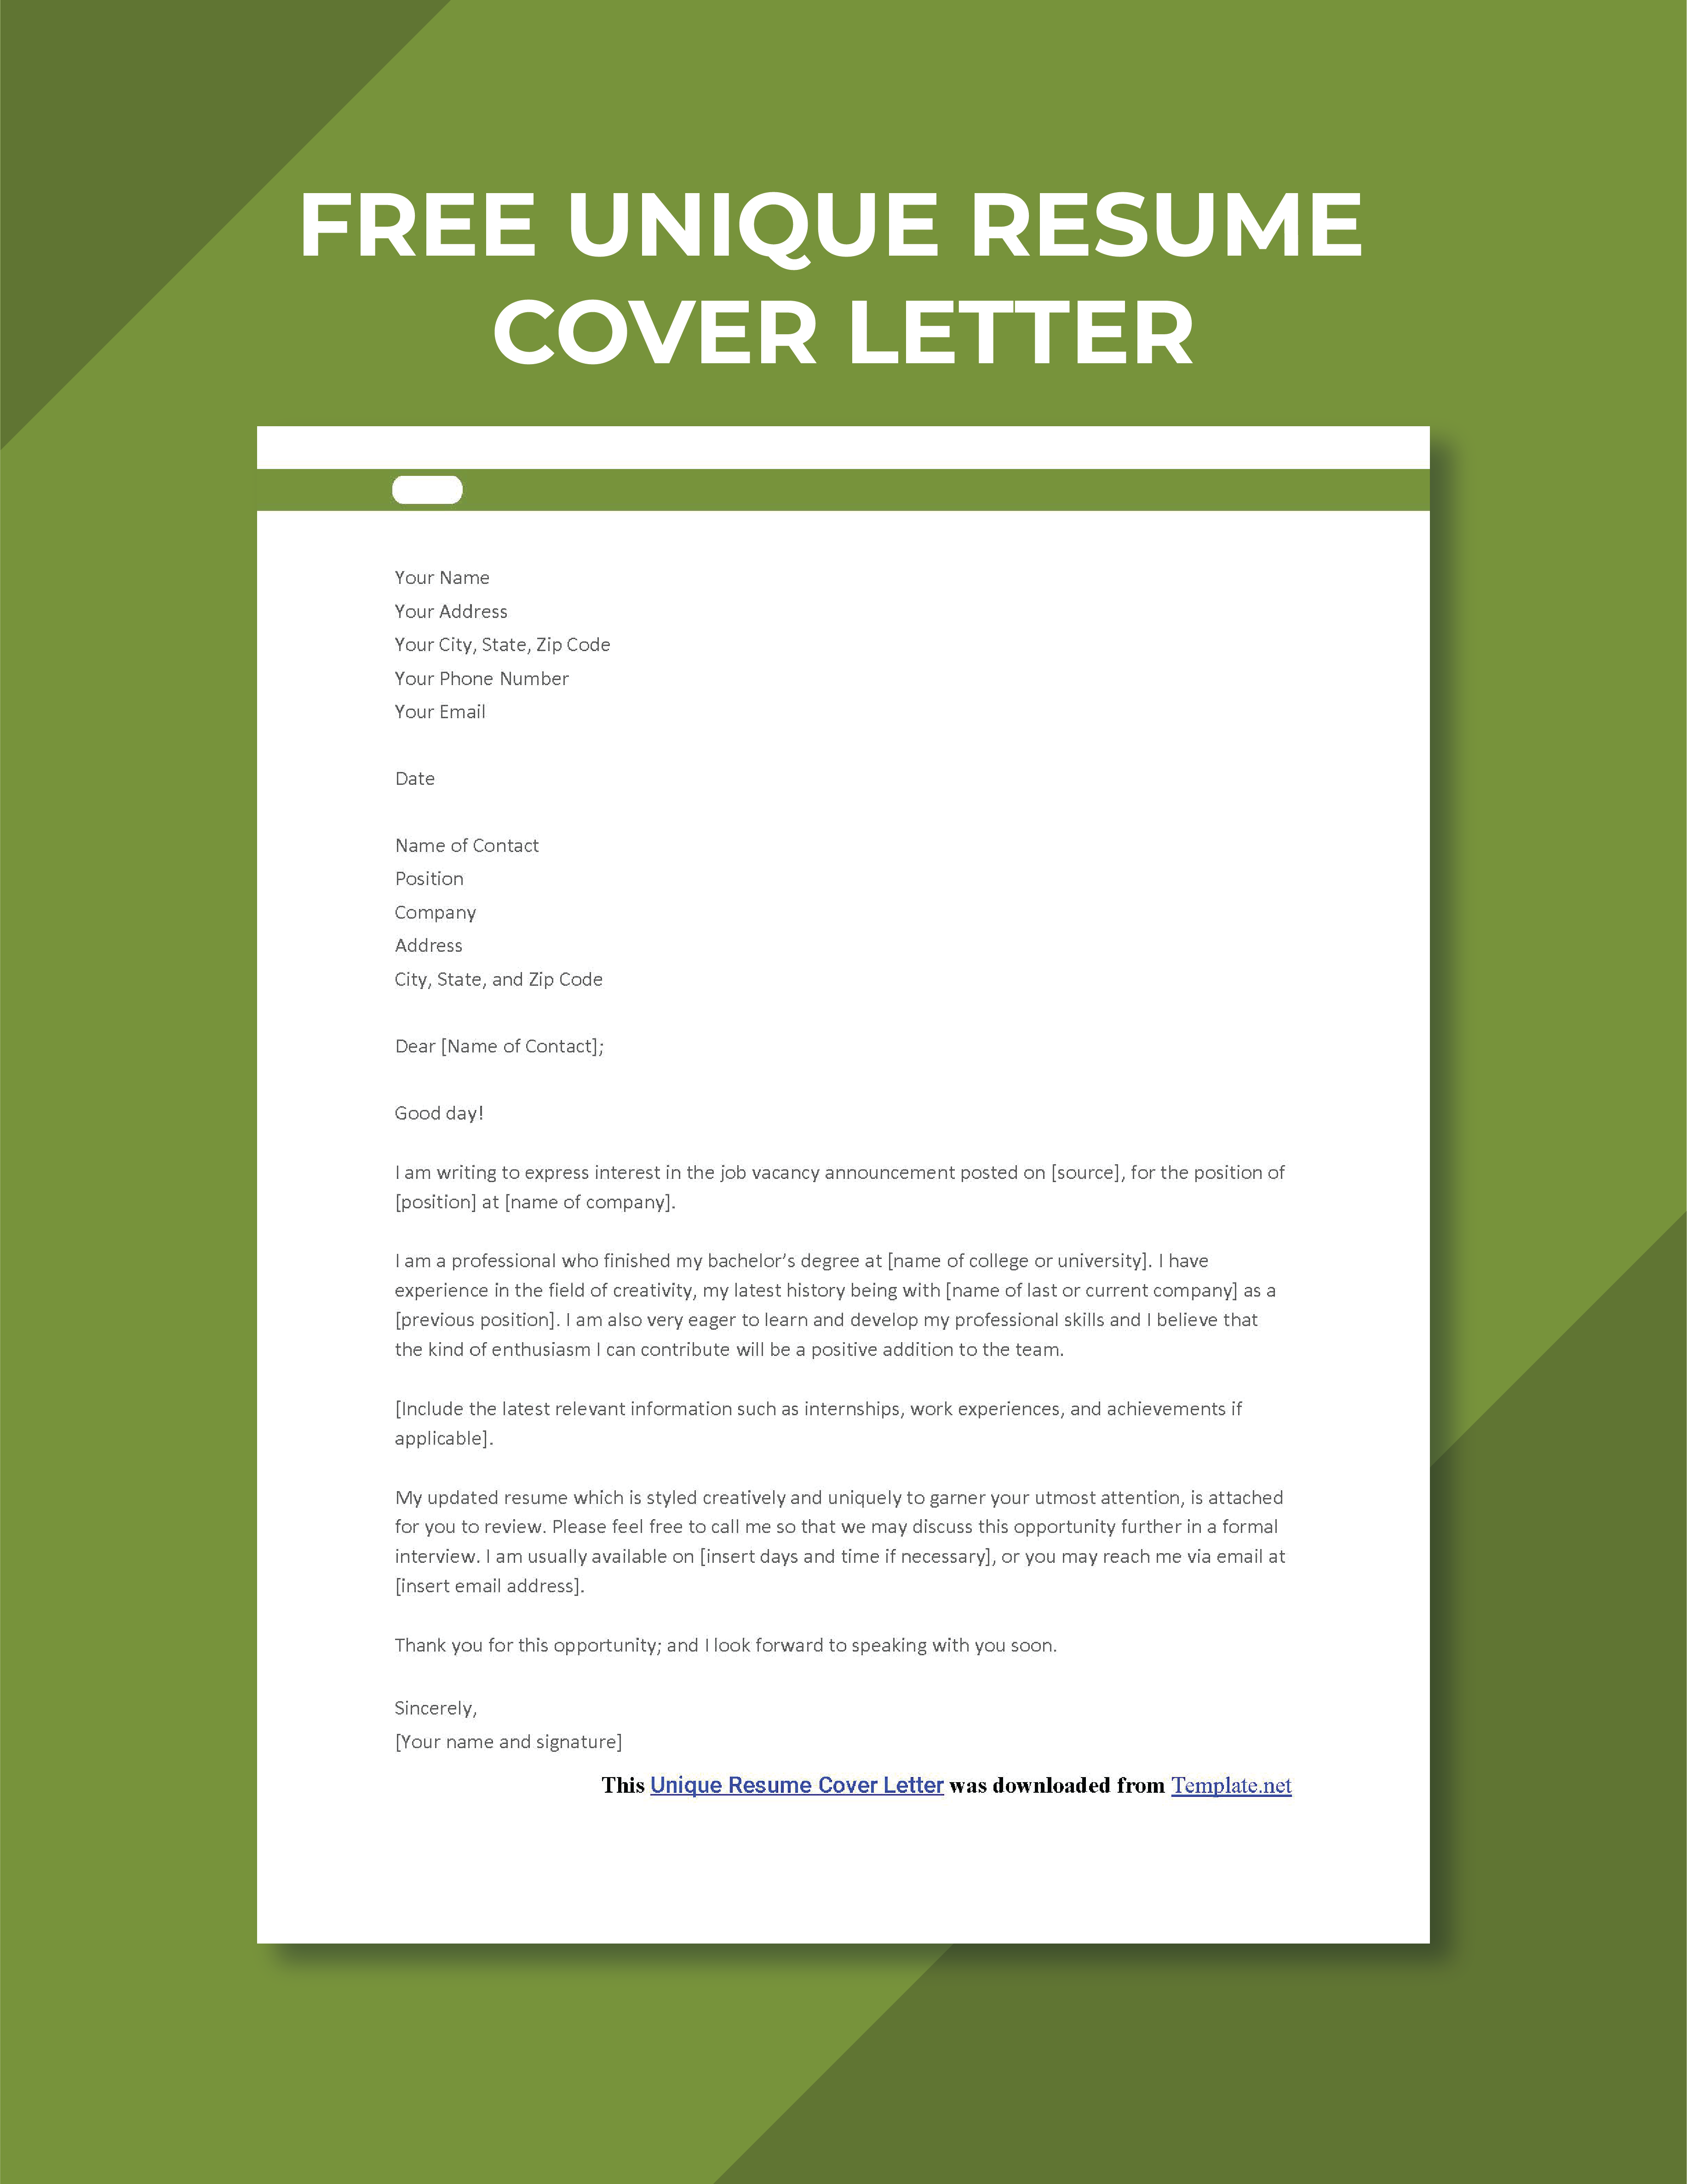 Unique Resume Cover Letter